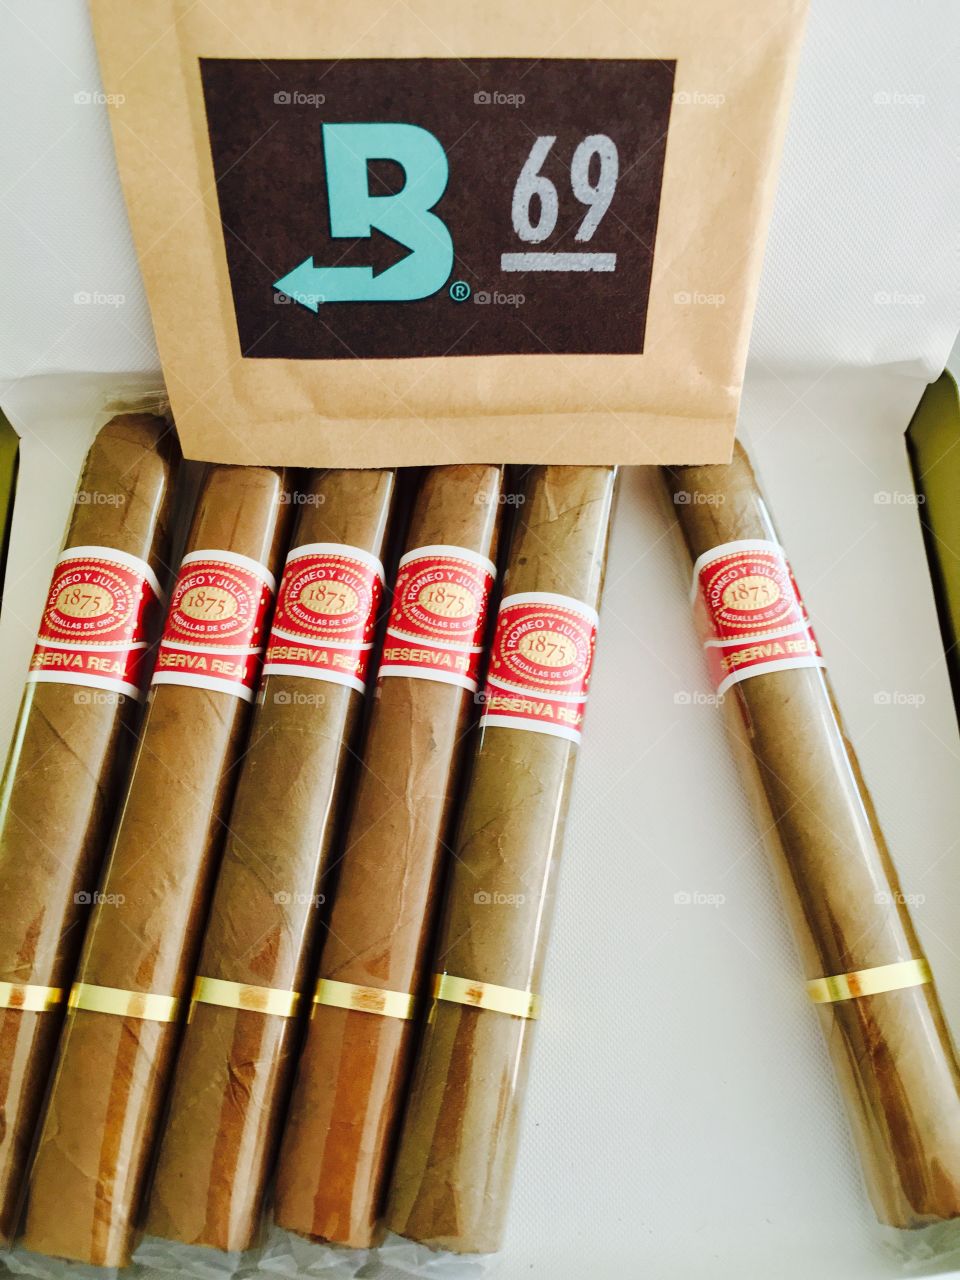 Cigars B69